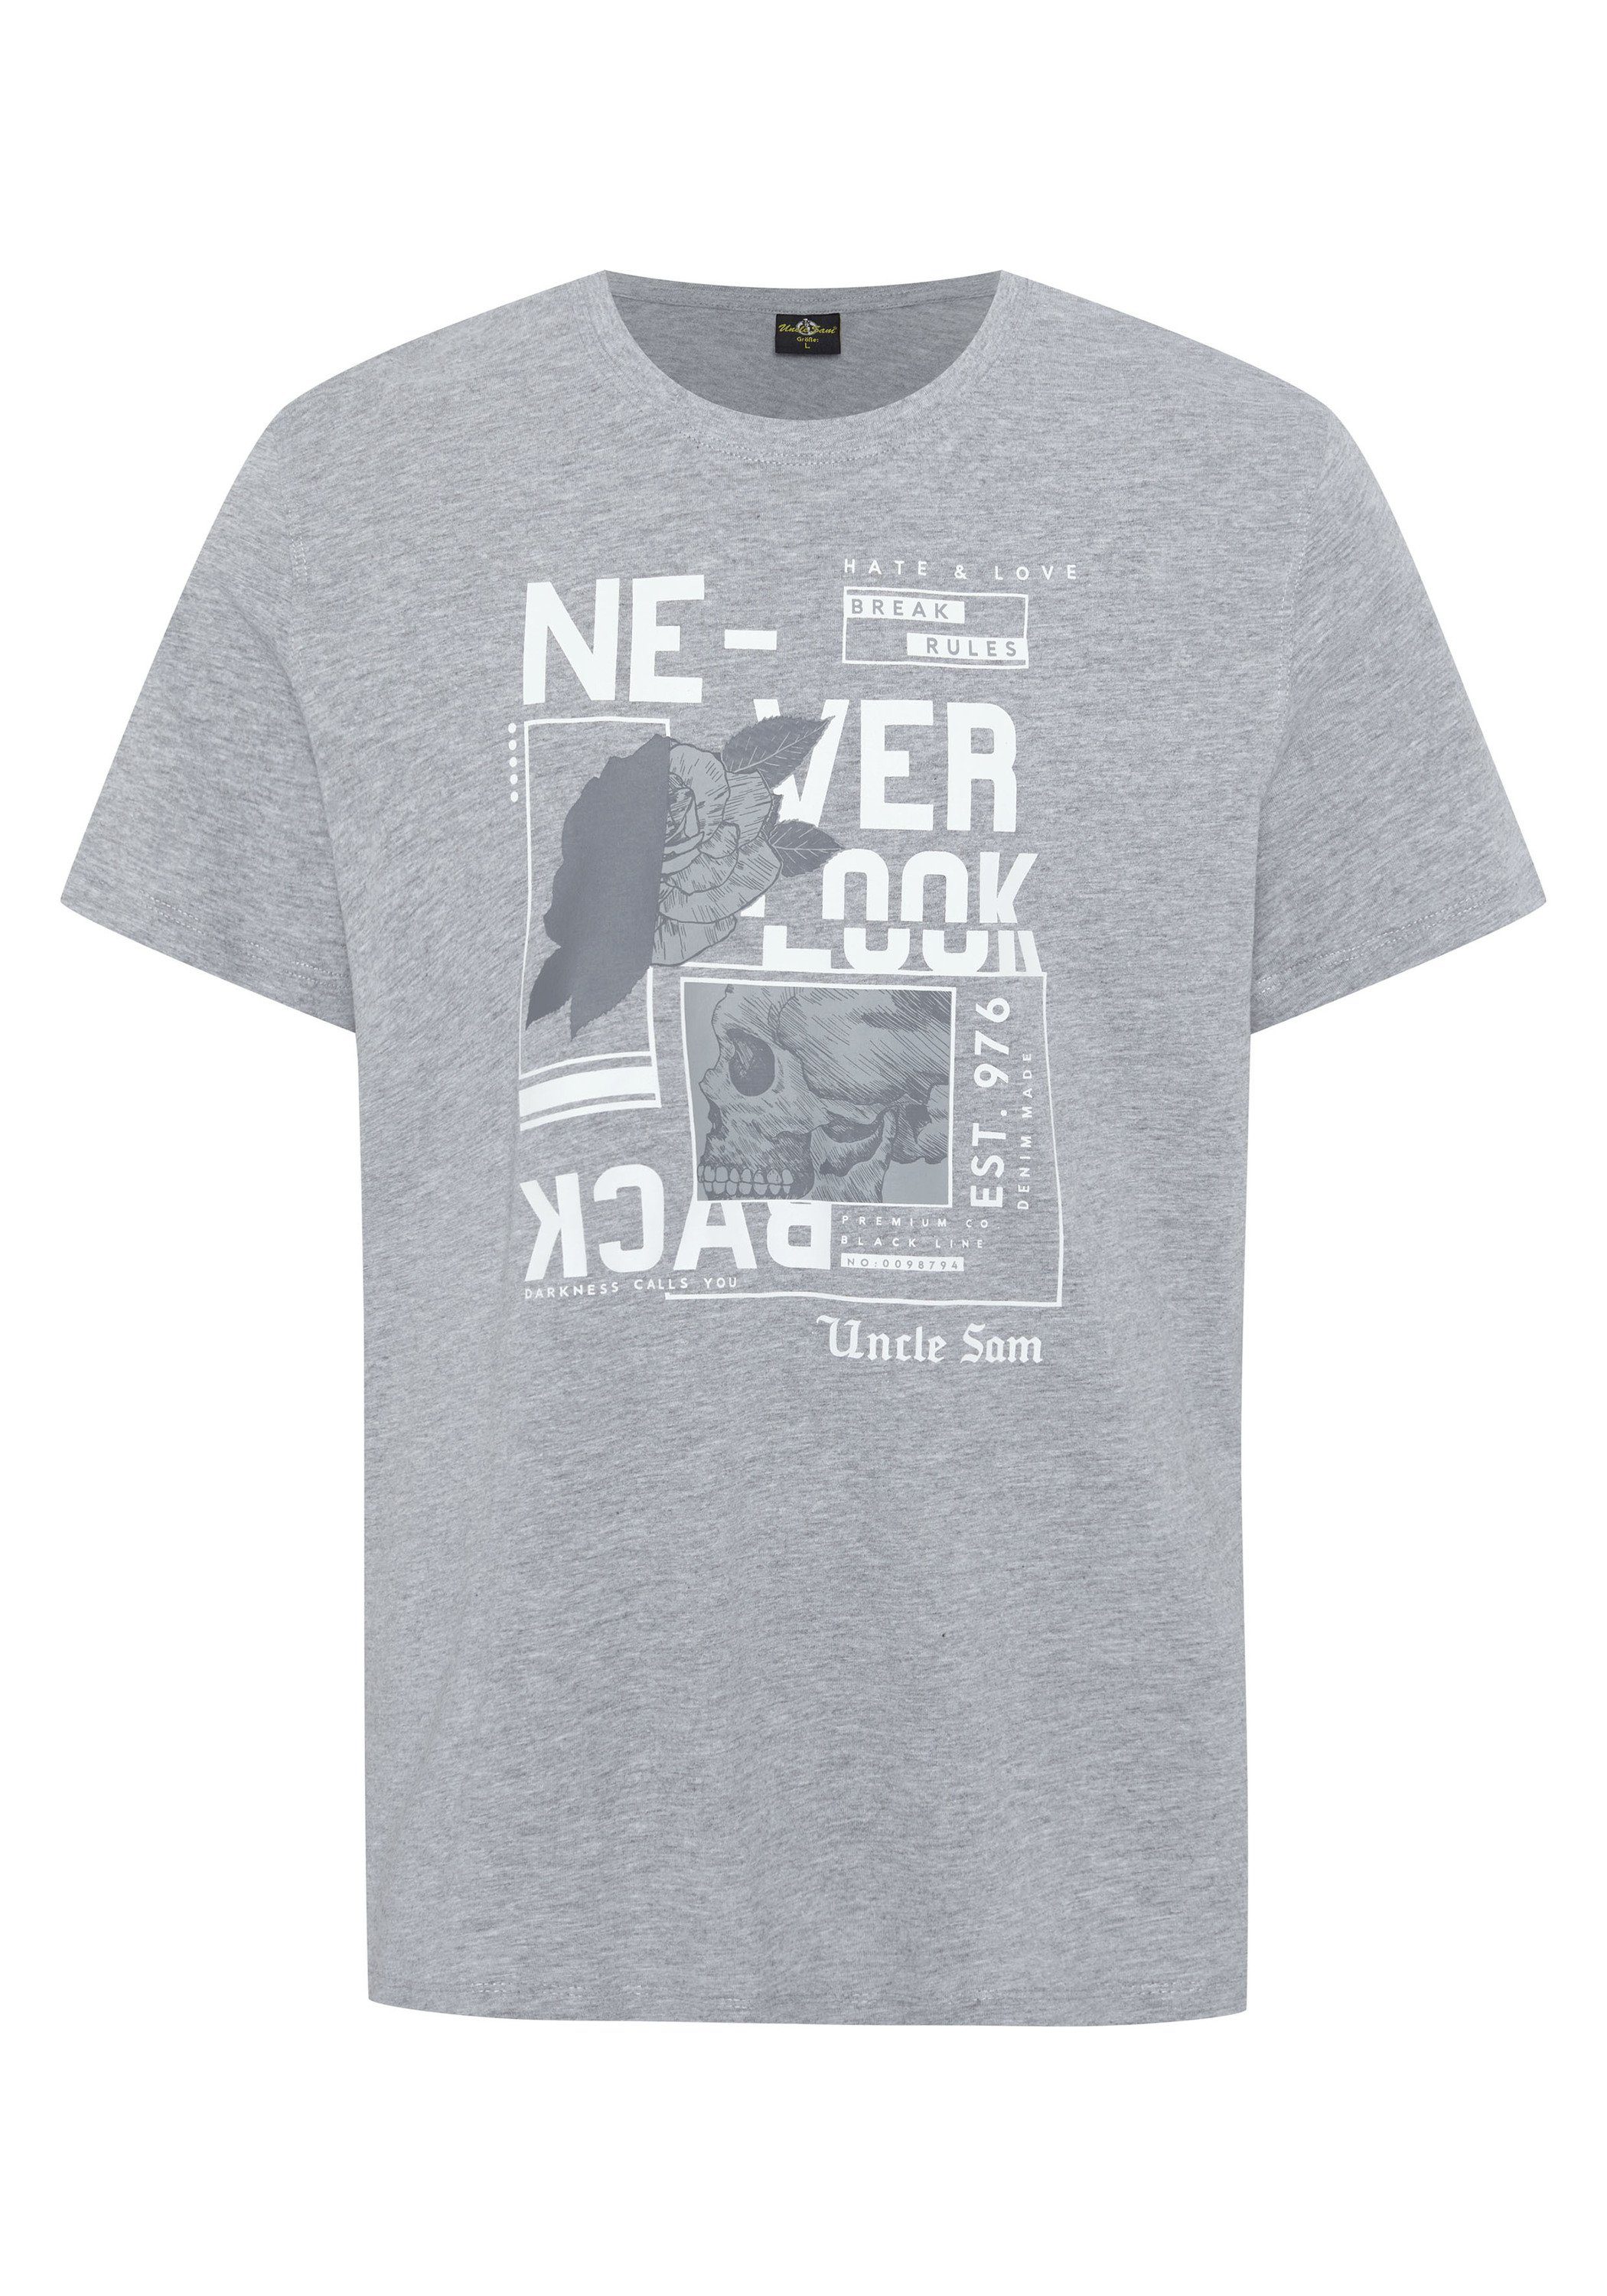 Uncle Sam Print-Shirt mit NEVER LOOK BACK Schriftzug 17-4402M Neutral Gray Melange